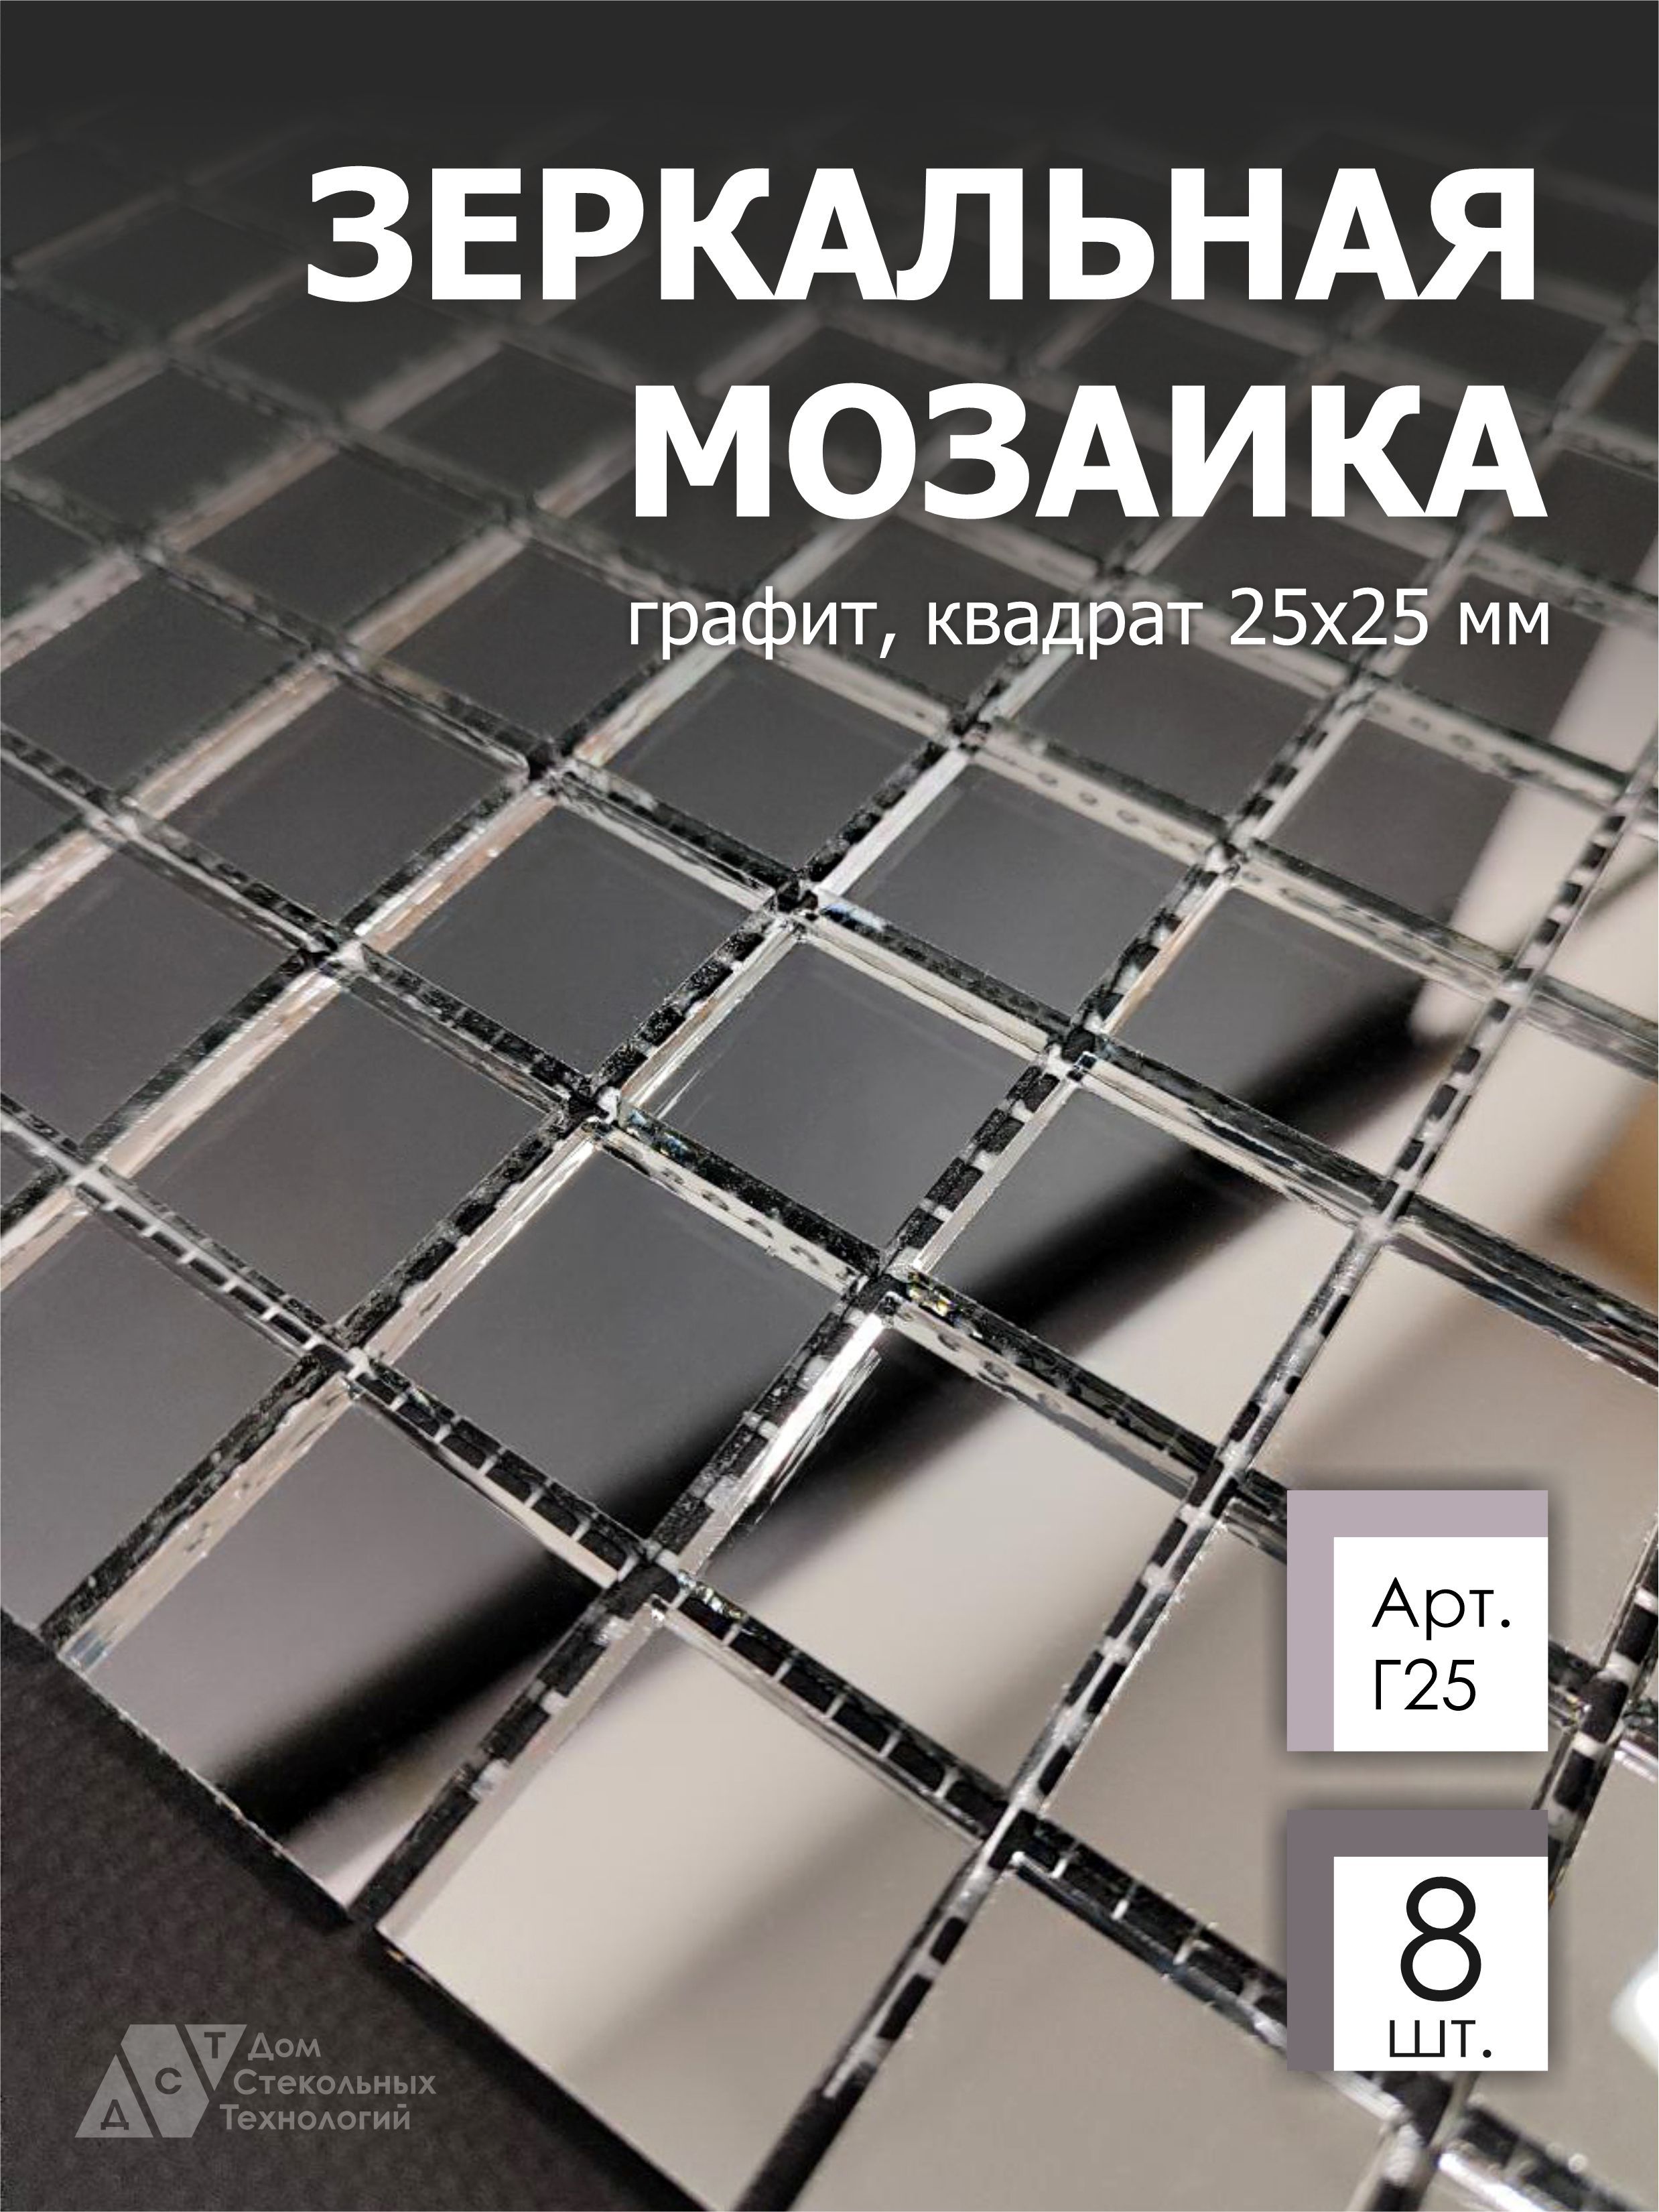 Зеркальная мозаика на сетке ДСТ Мозаика Г25 300х300мм графит 100%, с чипом 25*25мм, 8шт